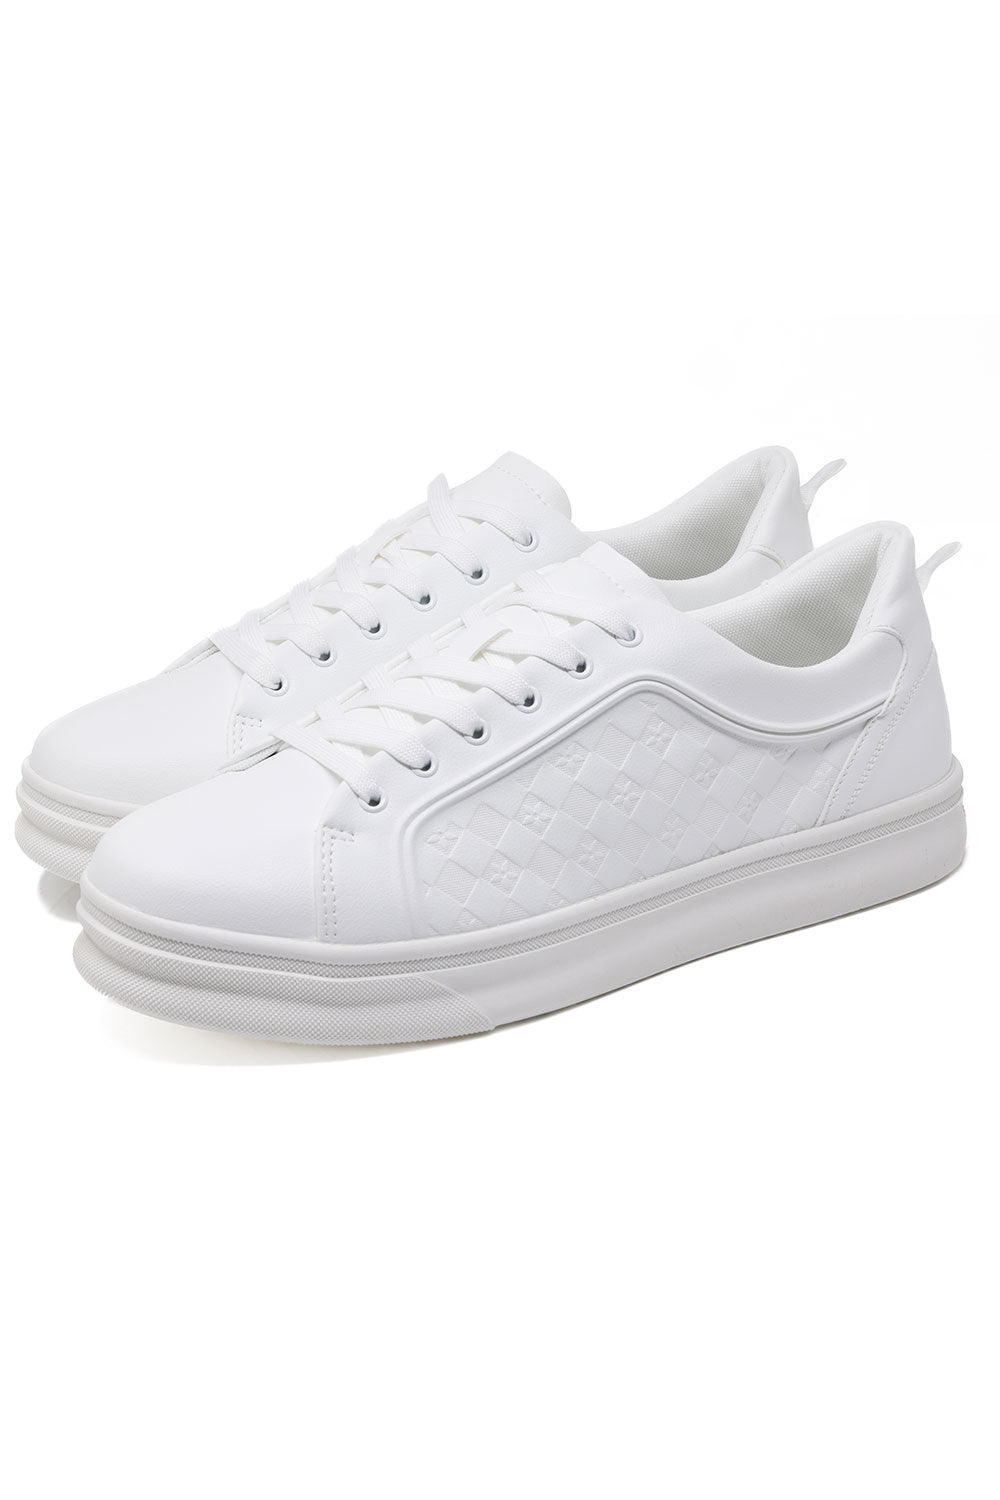 Barabas Men's Wholesale  Checkered Pattern Premium Leather Sneakers 4SK04 White